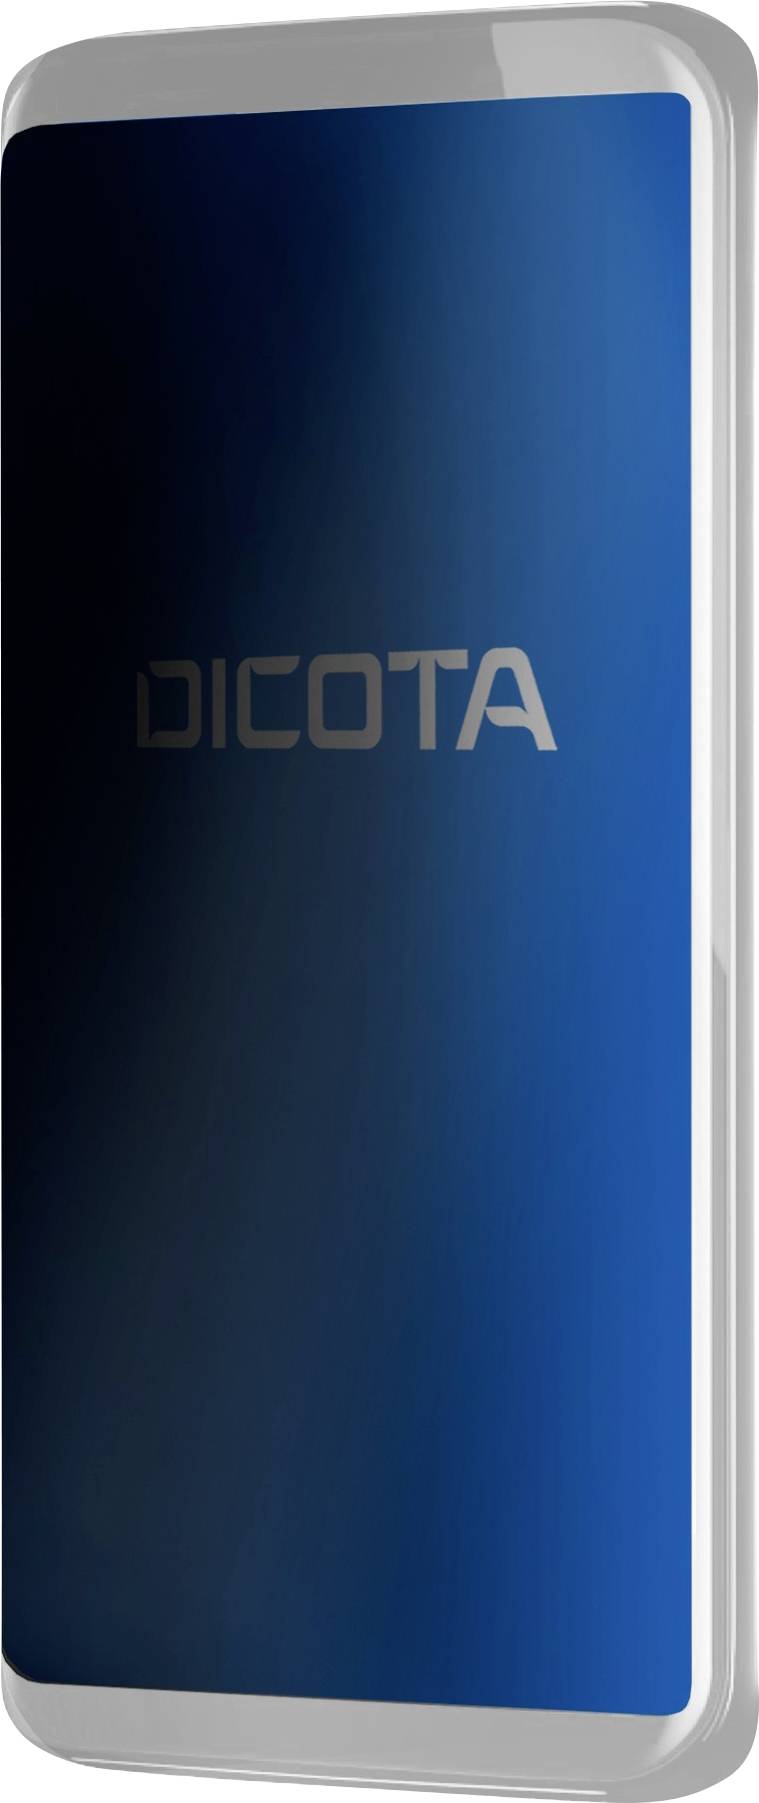 DICOTA Privacy Filter 2-Wege für iPhone 12 MINI selbstklebend